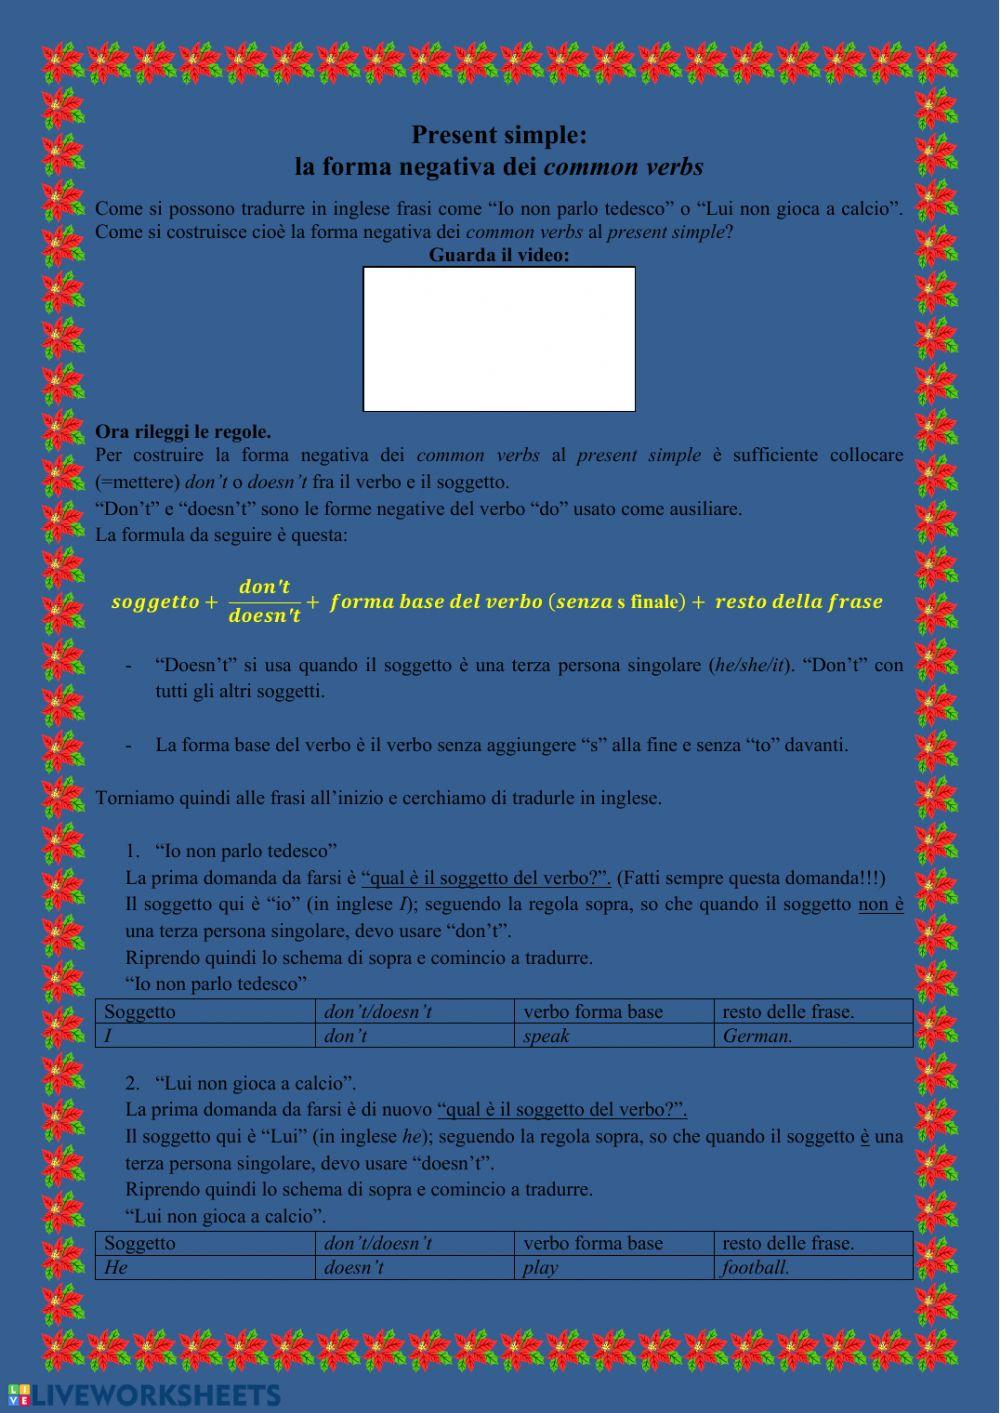 UDA 3.4 Present simple of common verbs (negative form)